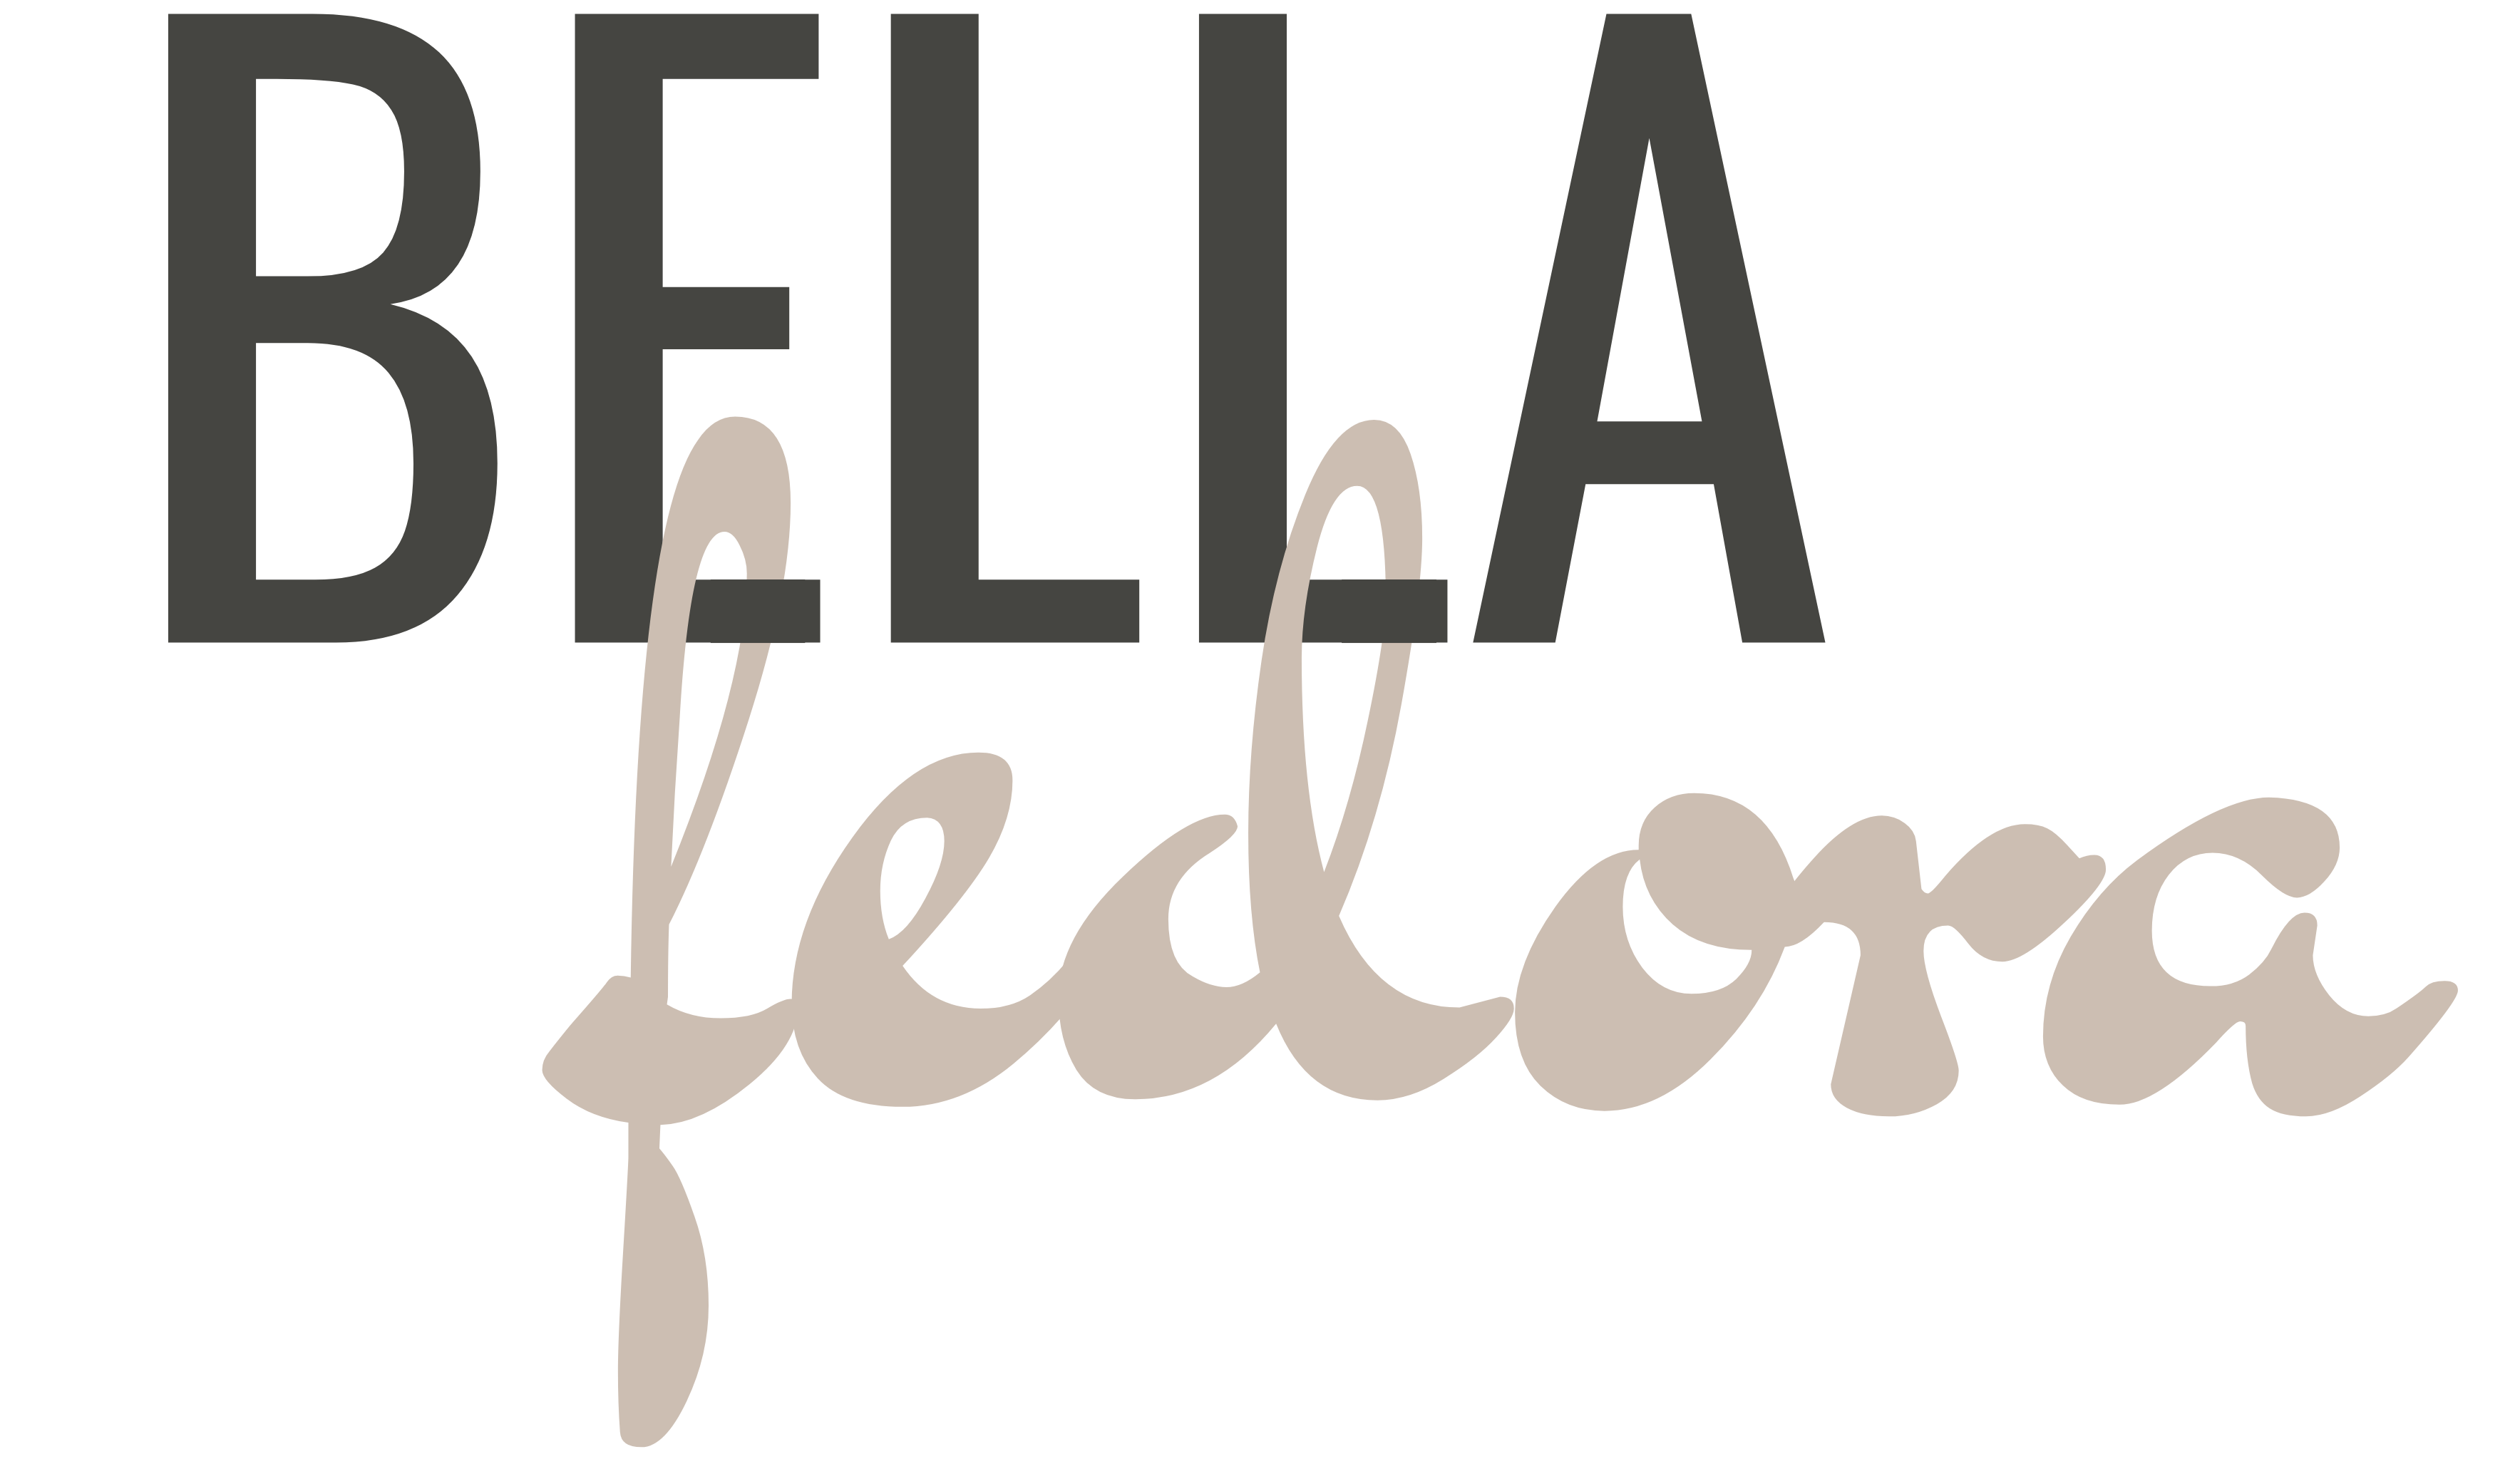 Bella Fedora